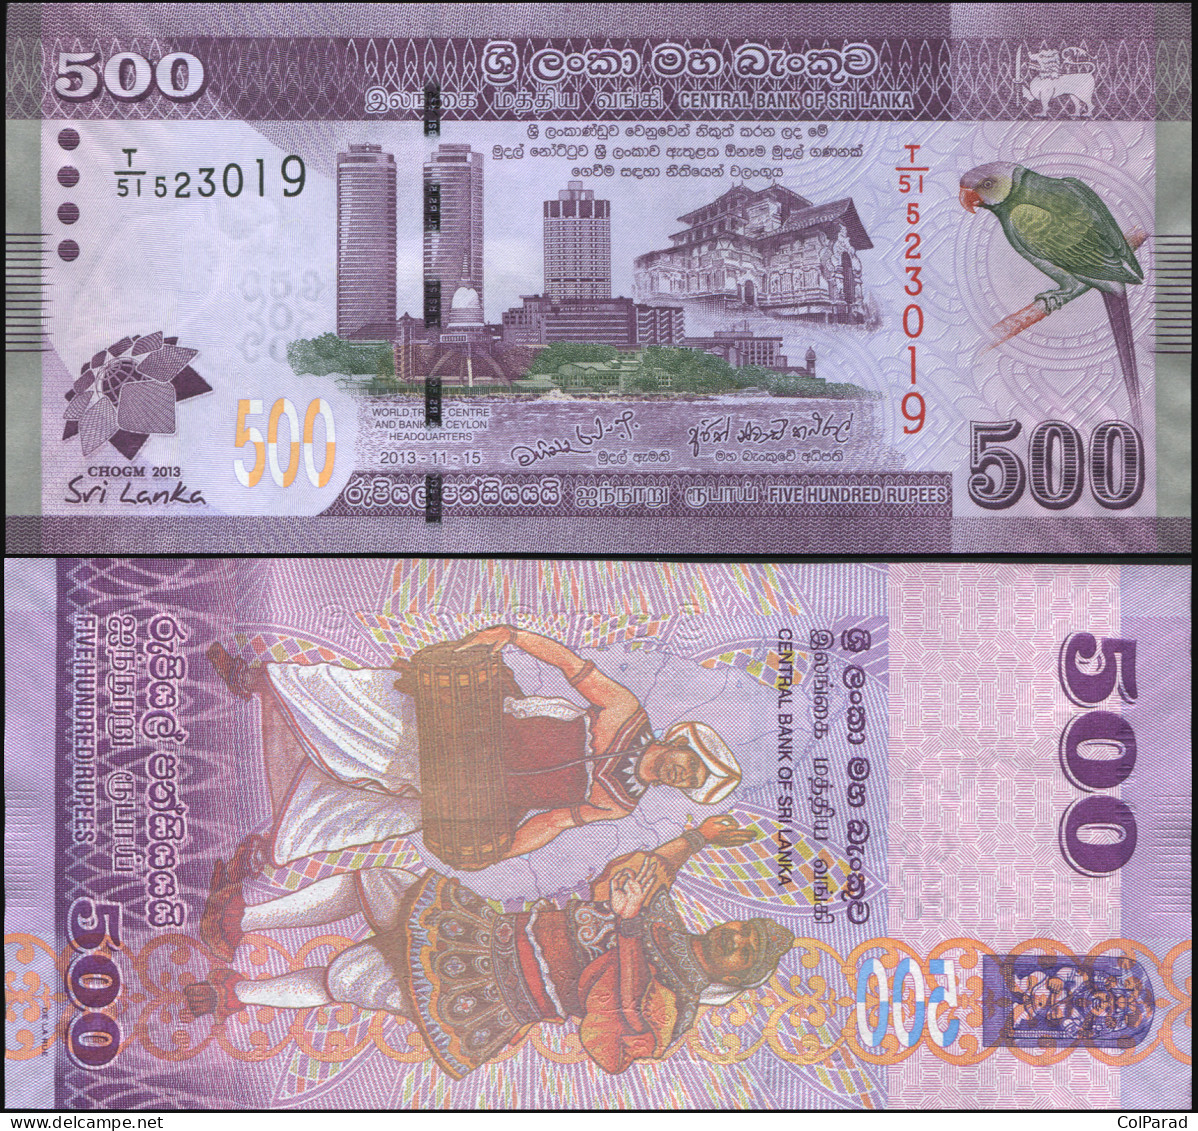 SRI LANKA 500 RUPEES - 15.11.2013 - Paper Unc - P.129a Banknote - CHOGM - Sri Lanka